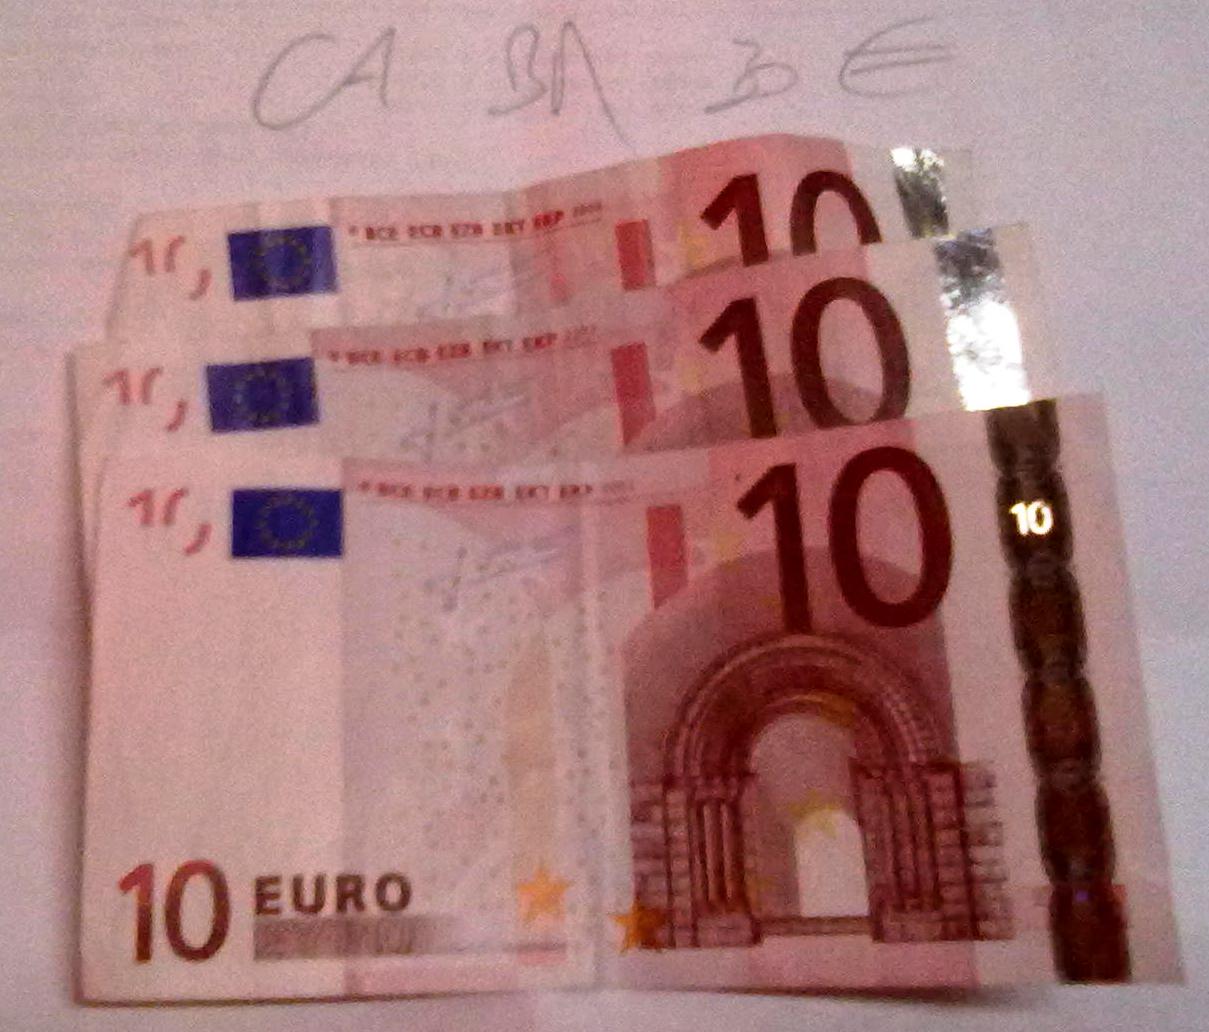 30€ in cash